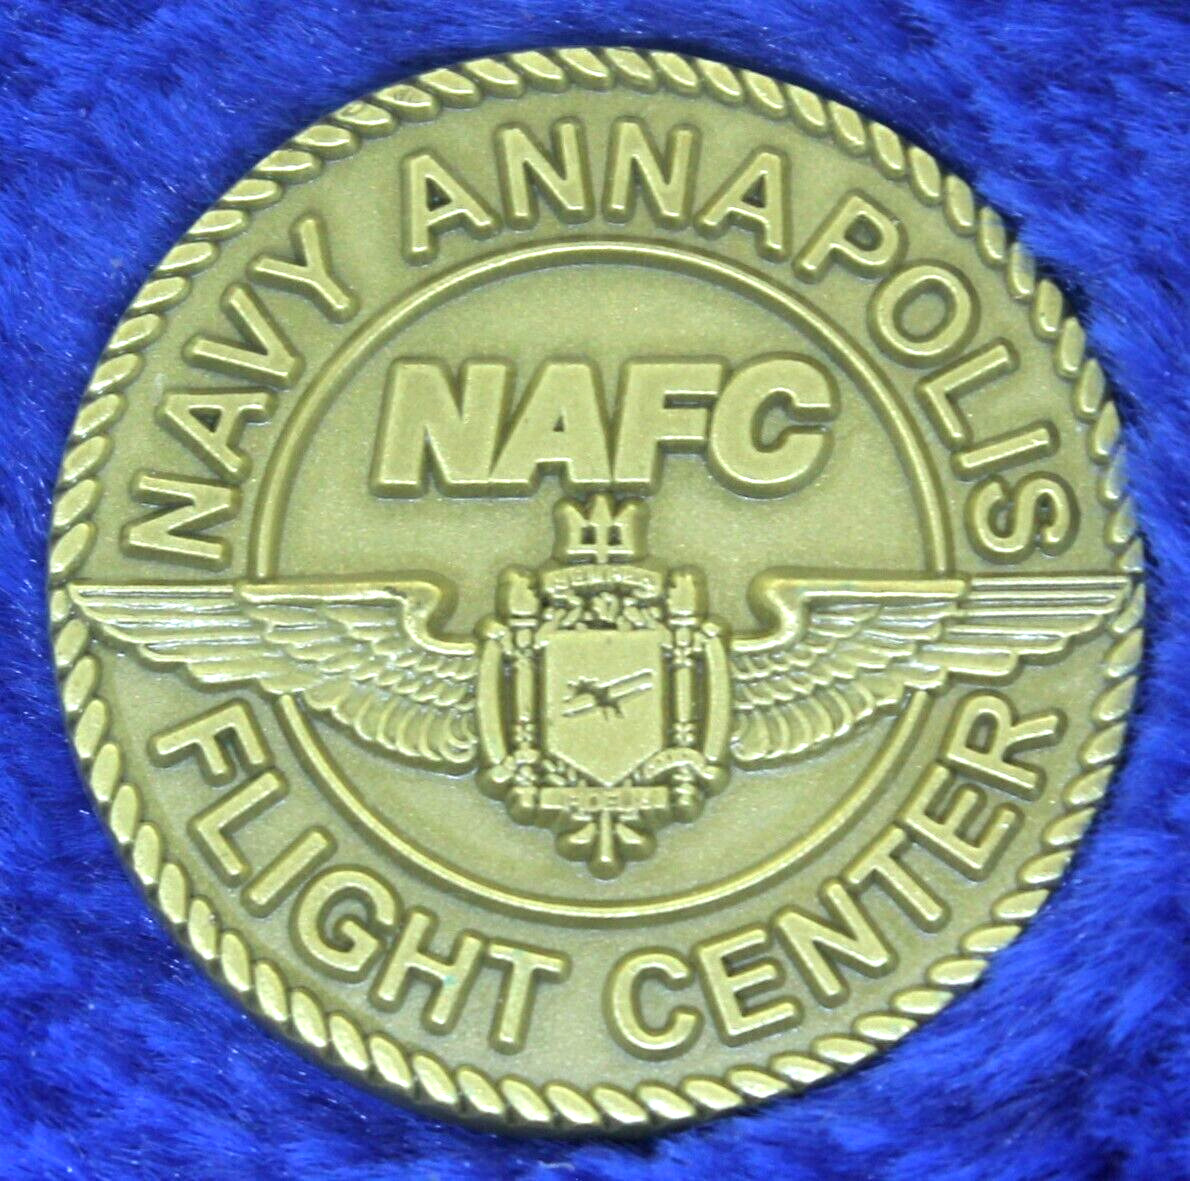 USN Annapolis Flight Center NAFC Challenge Coin PT-10